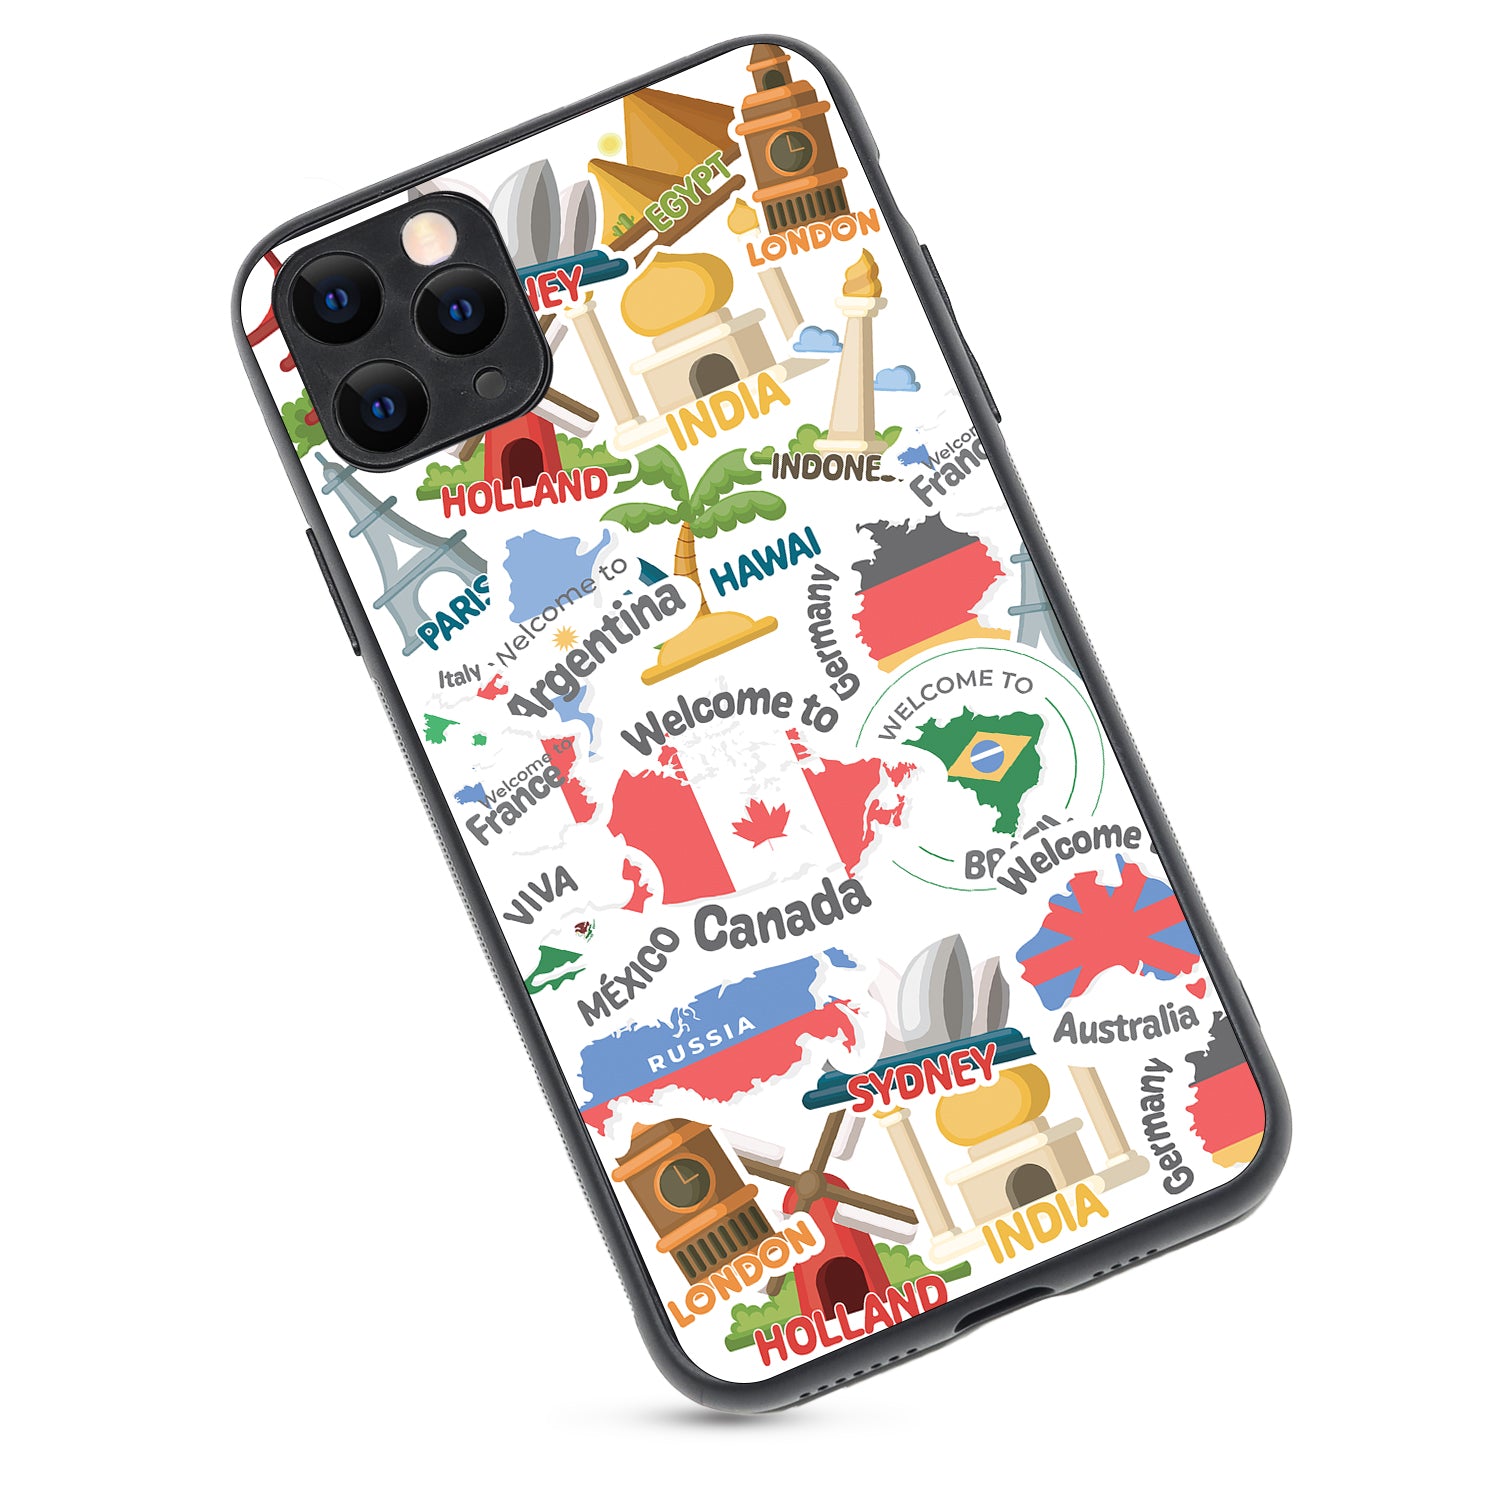 Travel Doodle iPhone 11 Pro Max Case